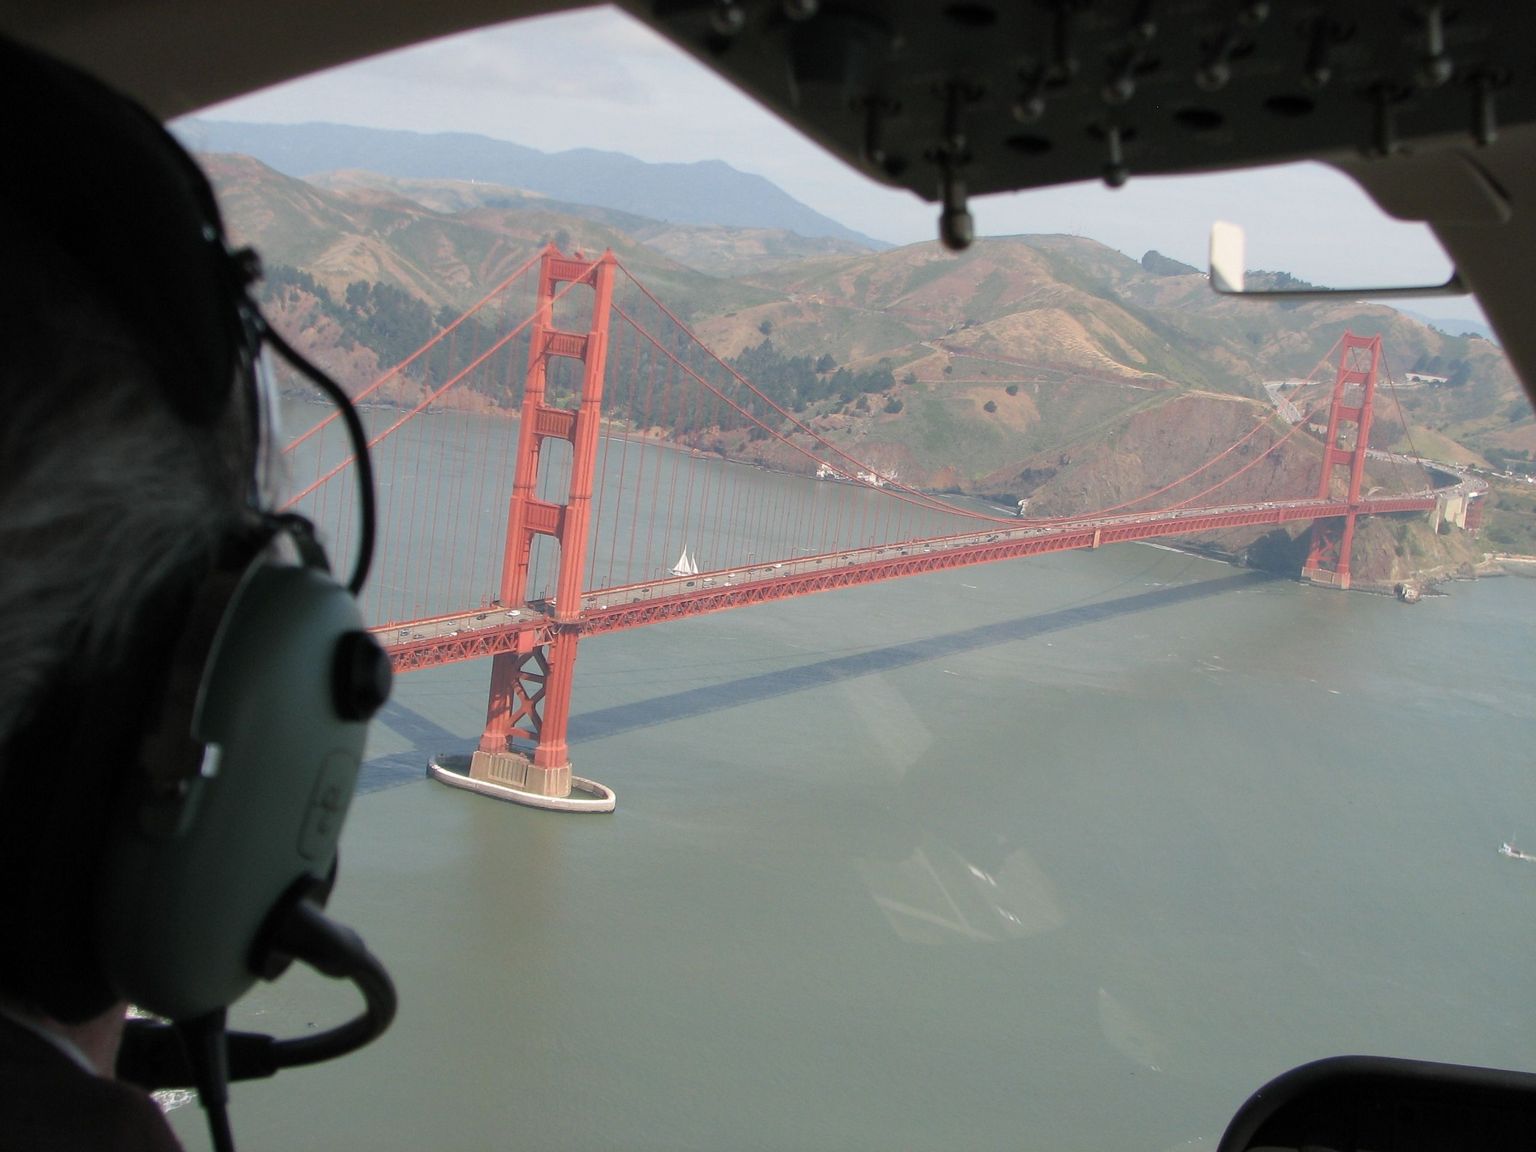 Getting close to the Golden Gate Bridge